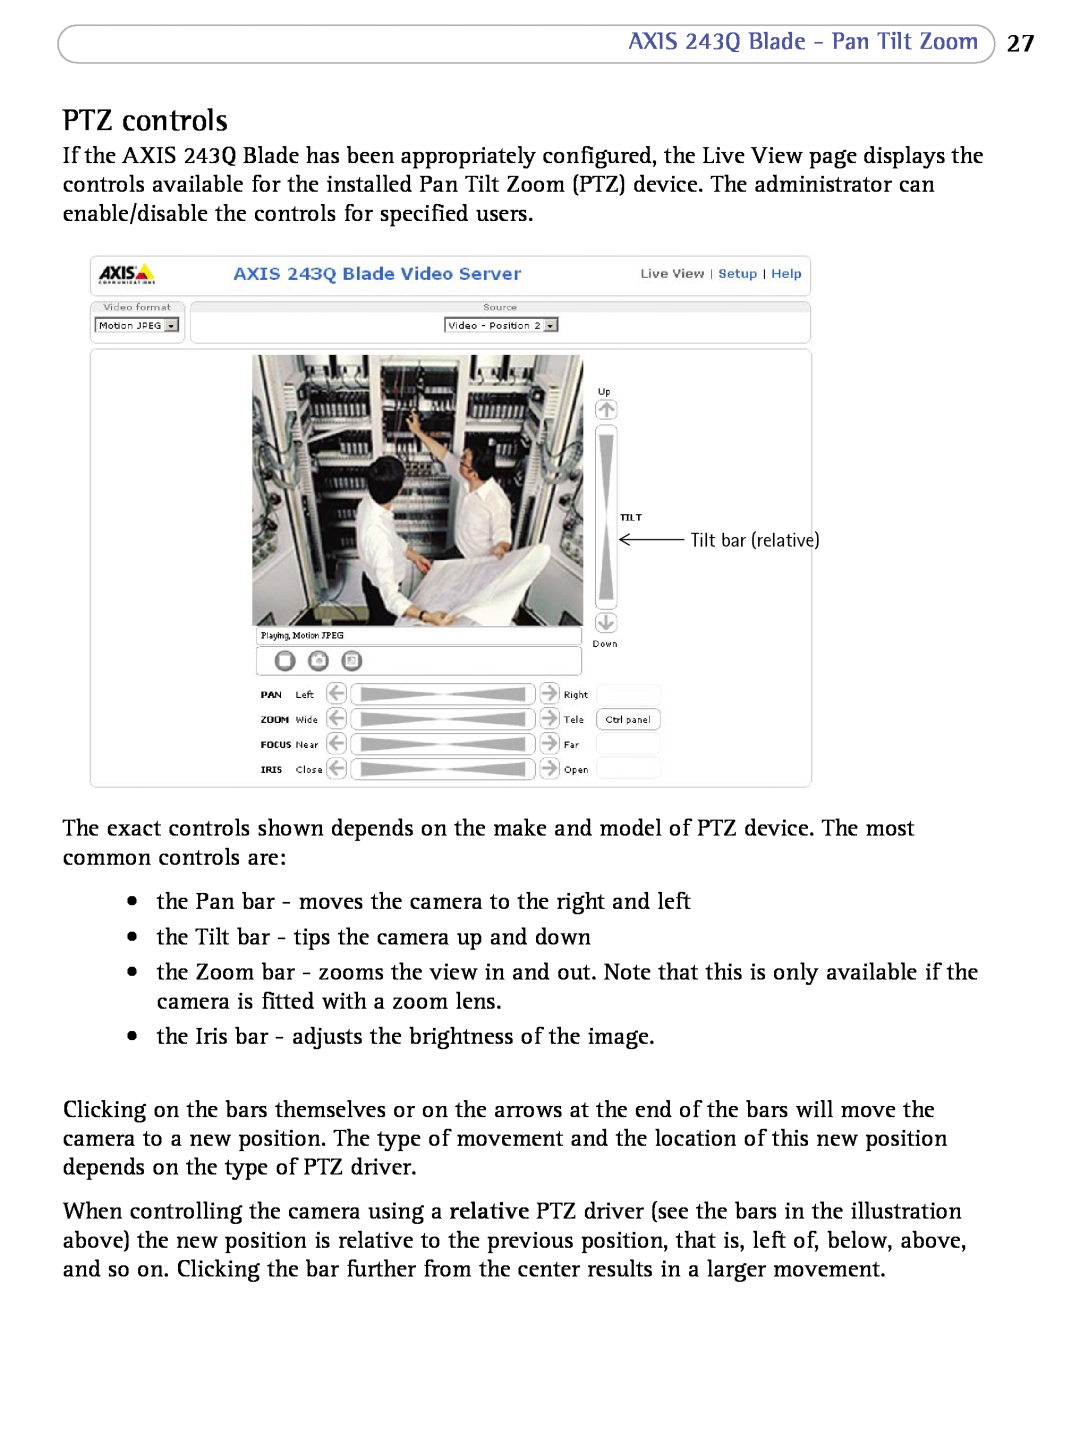 Axis Communications user manual PTZ controls, AXIS 243Q Blade - Pan Tilt Zoom 